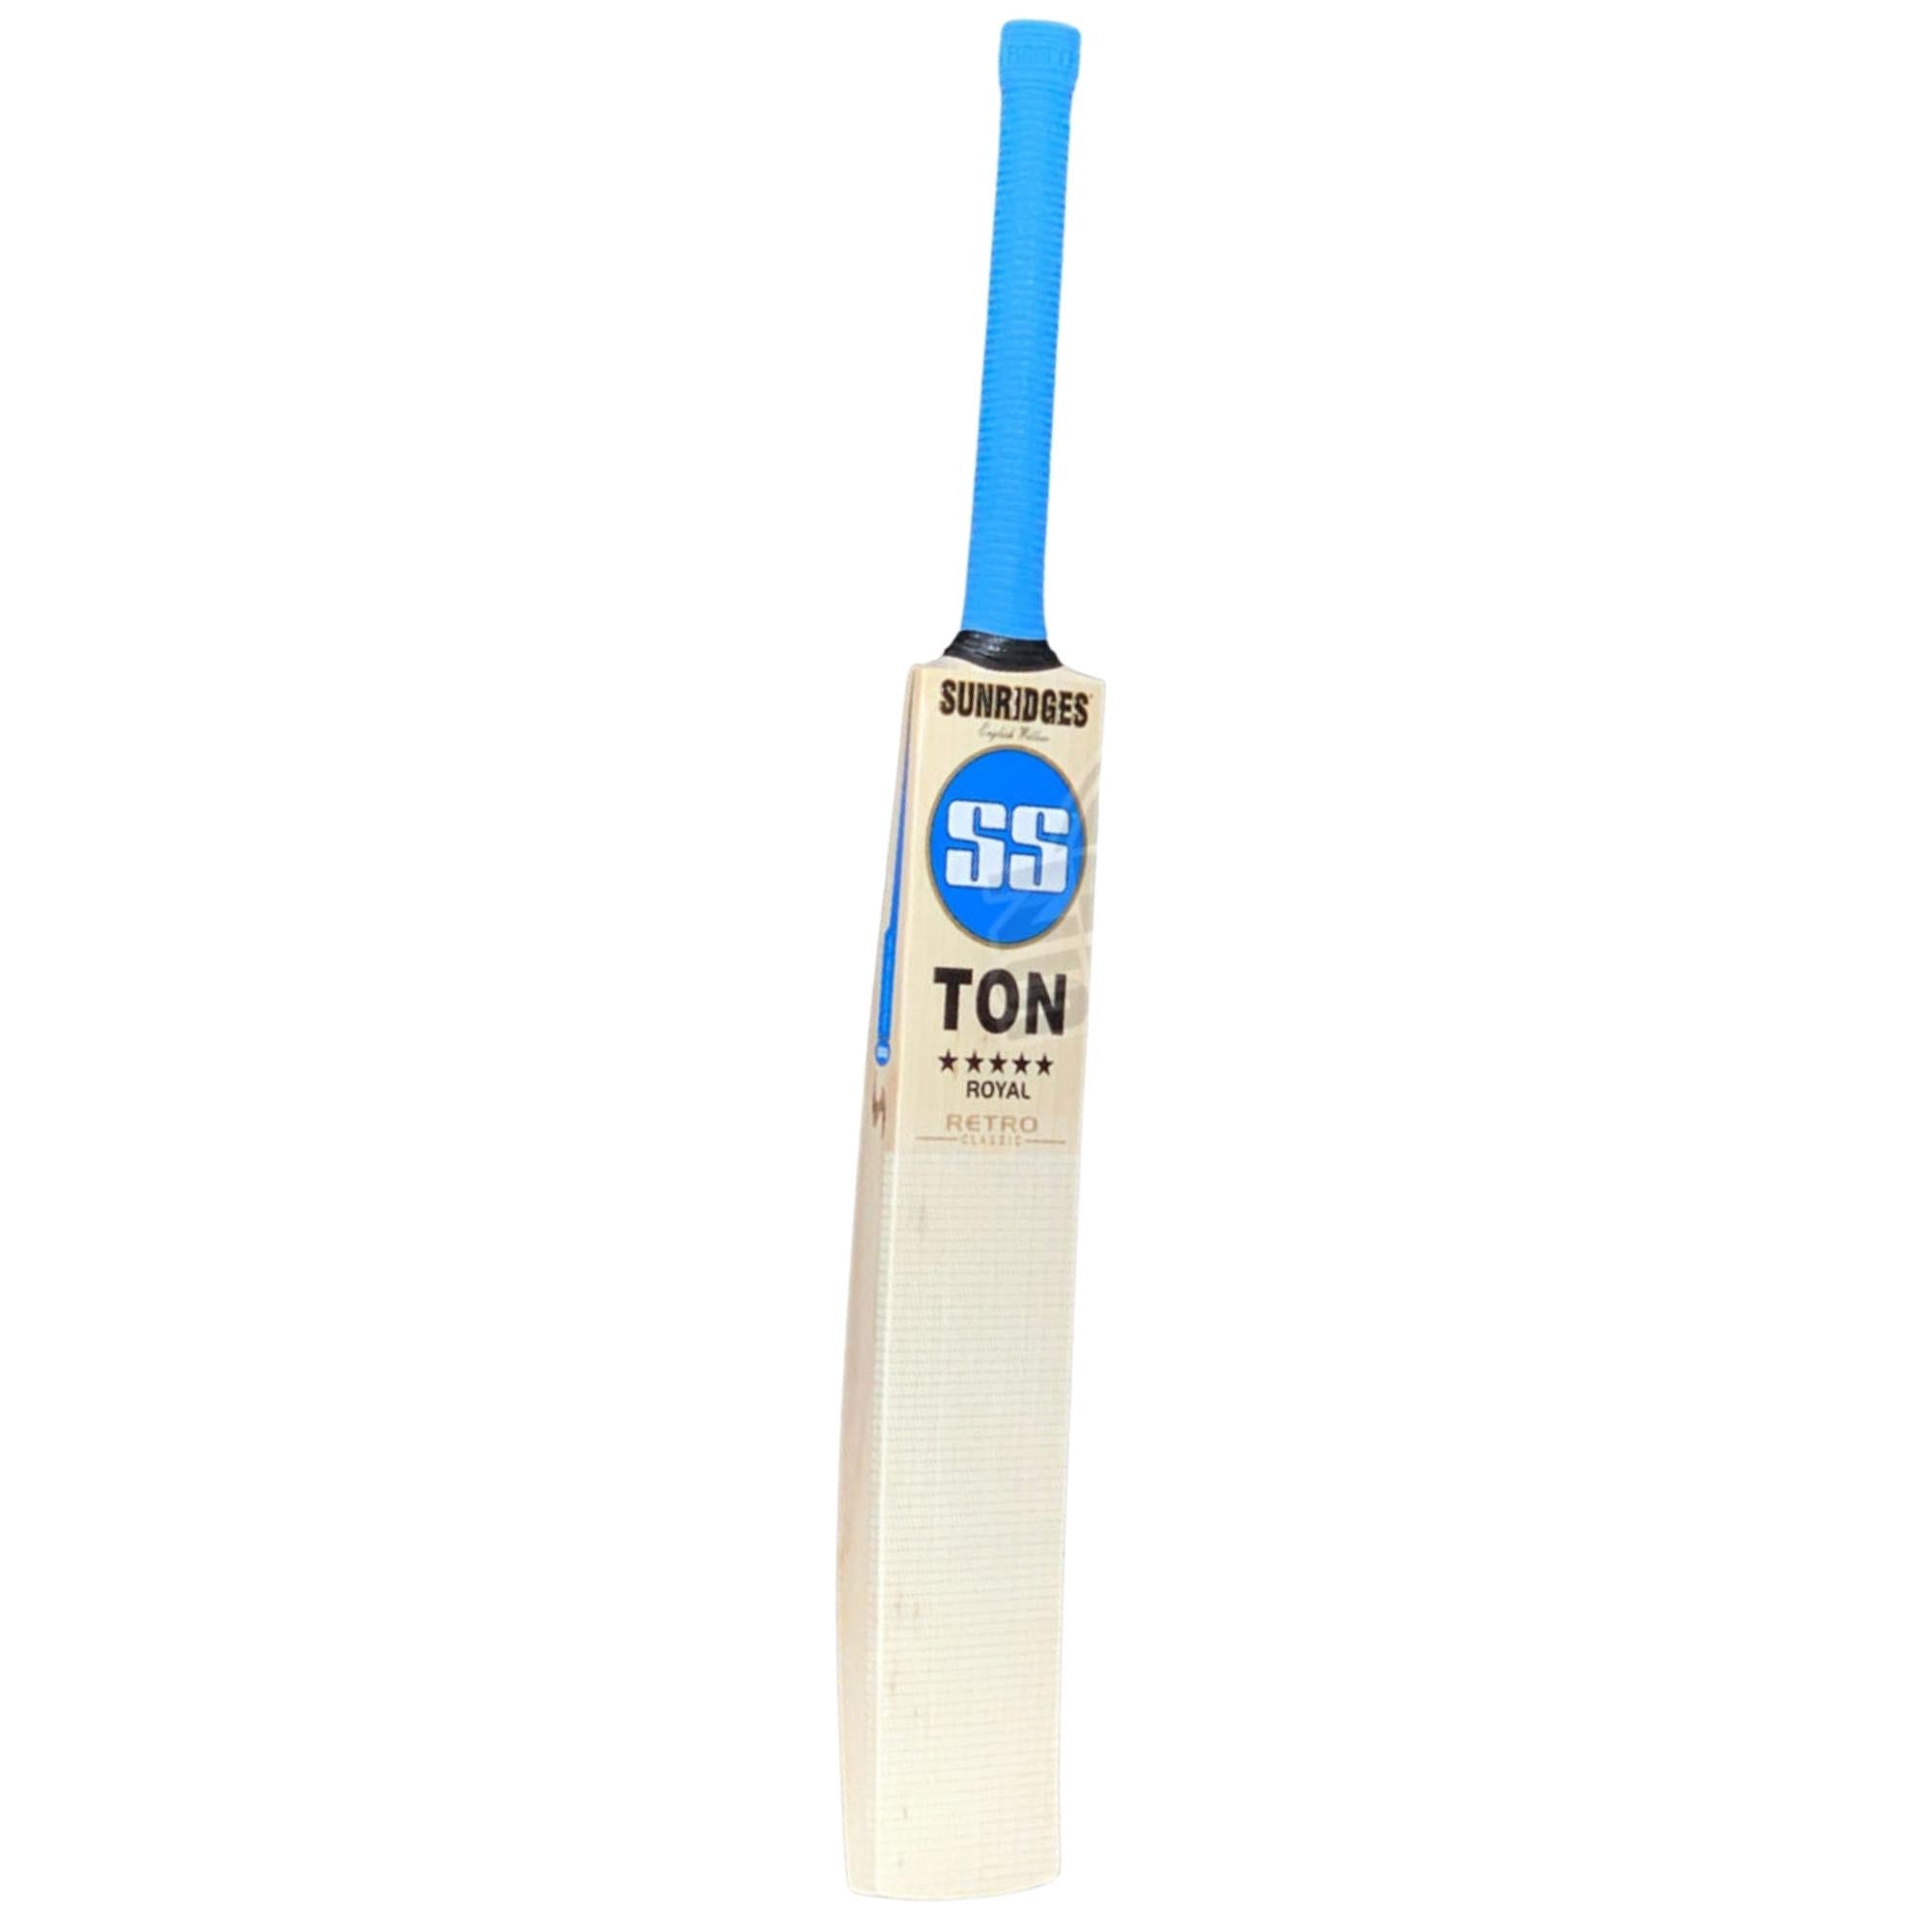 SS Ton Sunridges Royal Retro Classic Cricket Bat